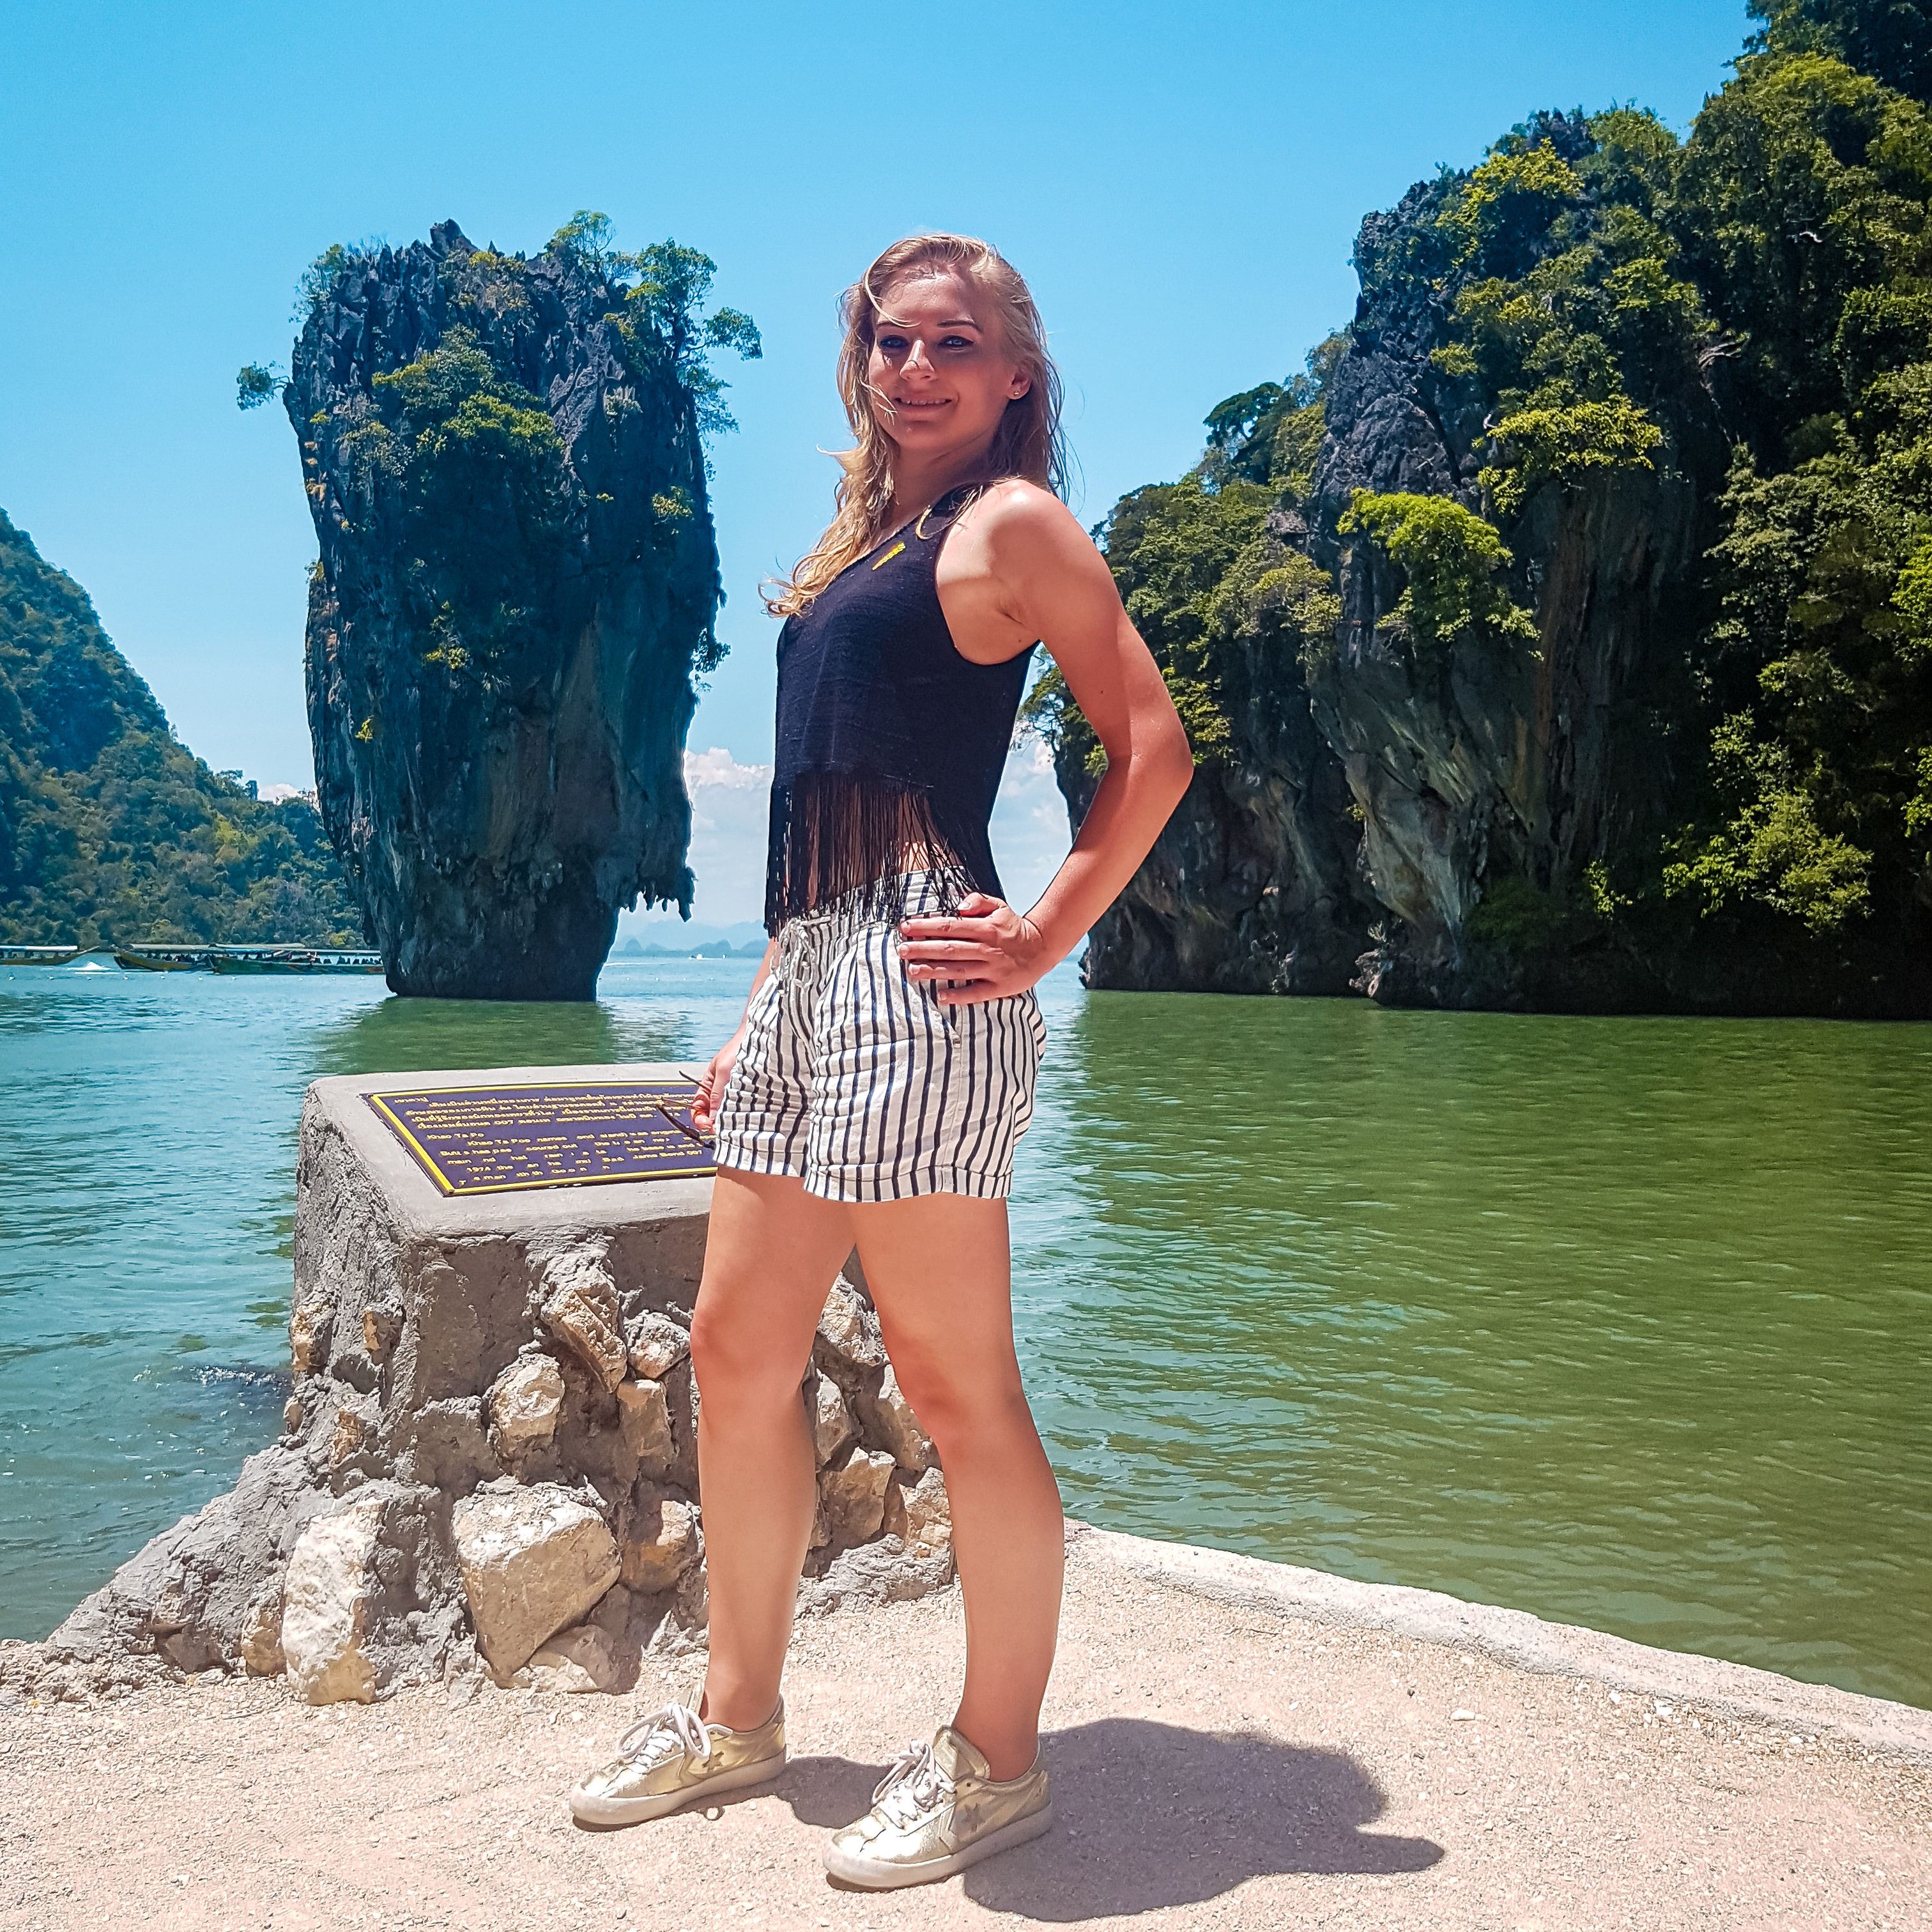 Phang Nga Bay at the James Bond Island Tour in Phuket Thailand